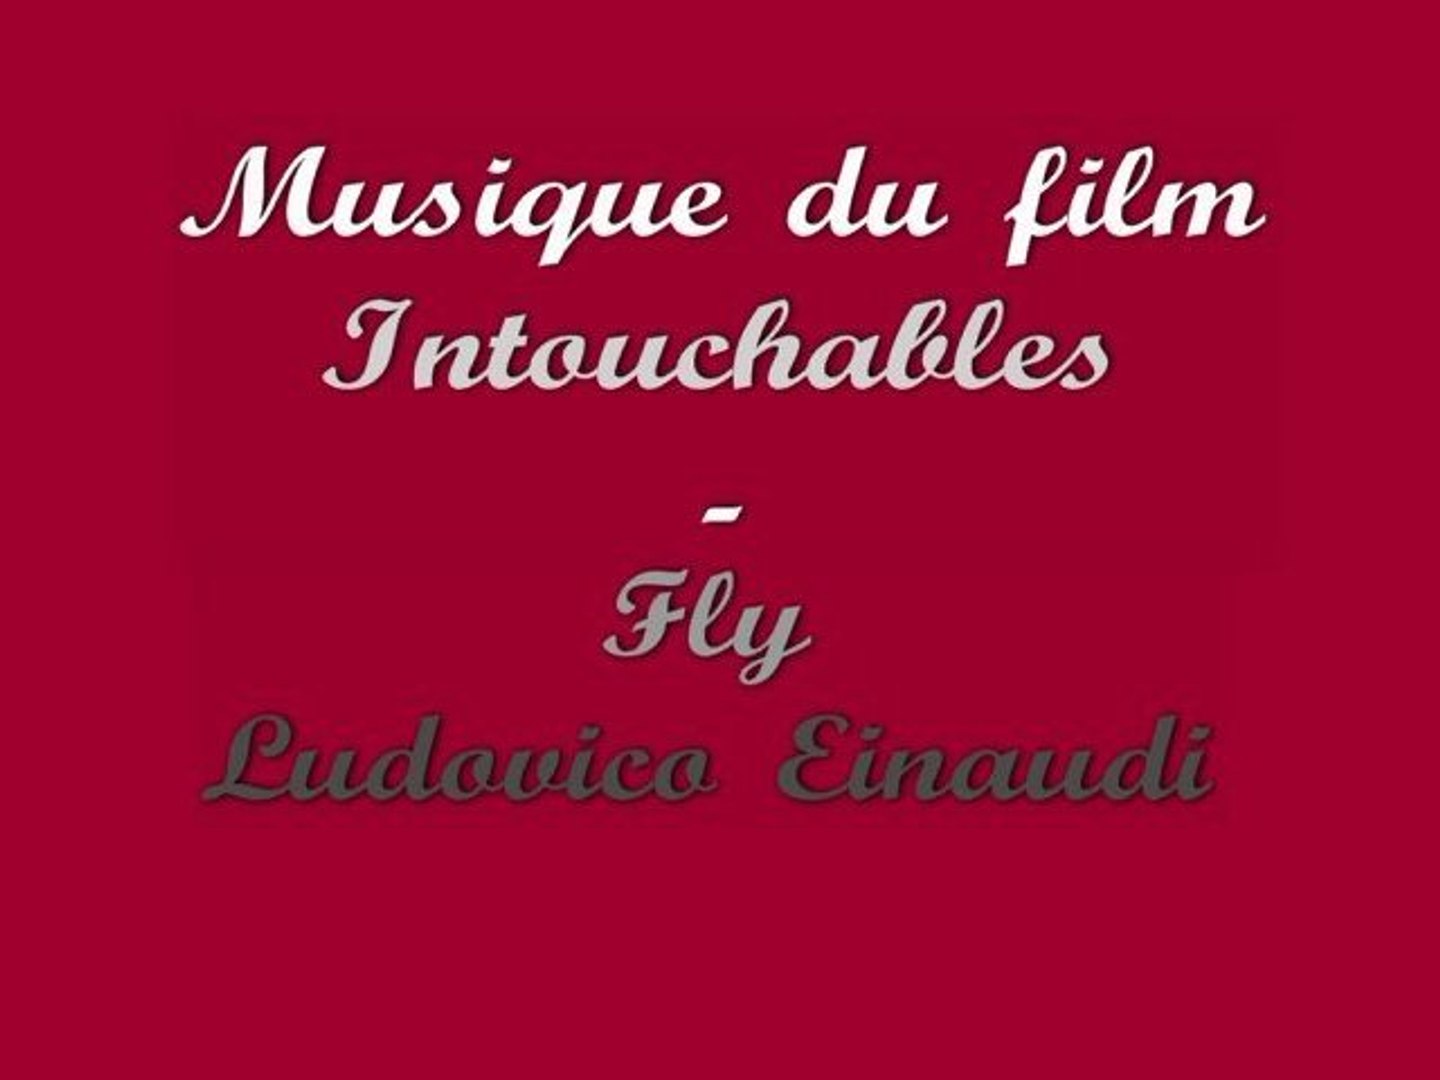 Musique du film Intouchables - Fly - Ludovico Einaudi - Piano - Vidéo  Dailymotion